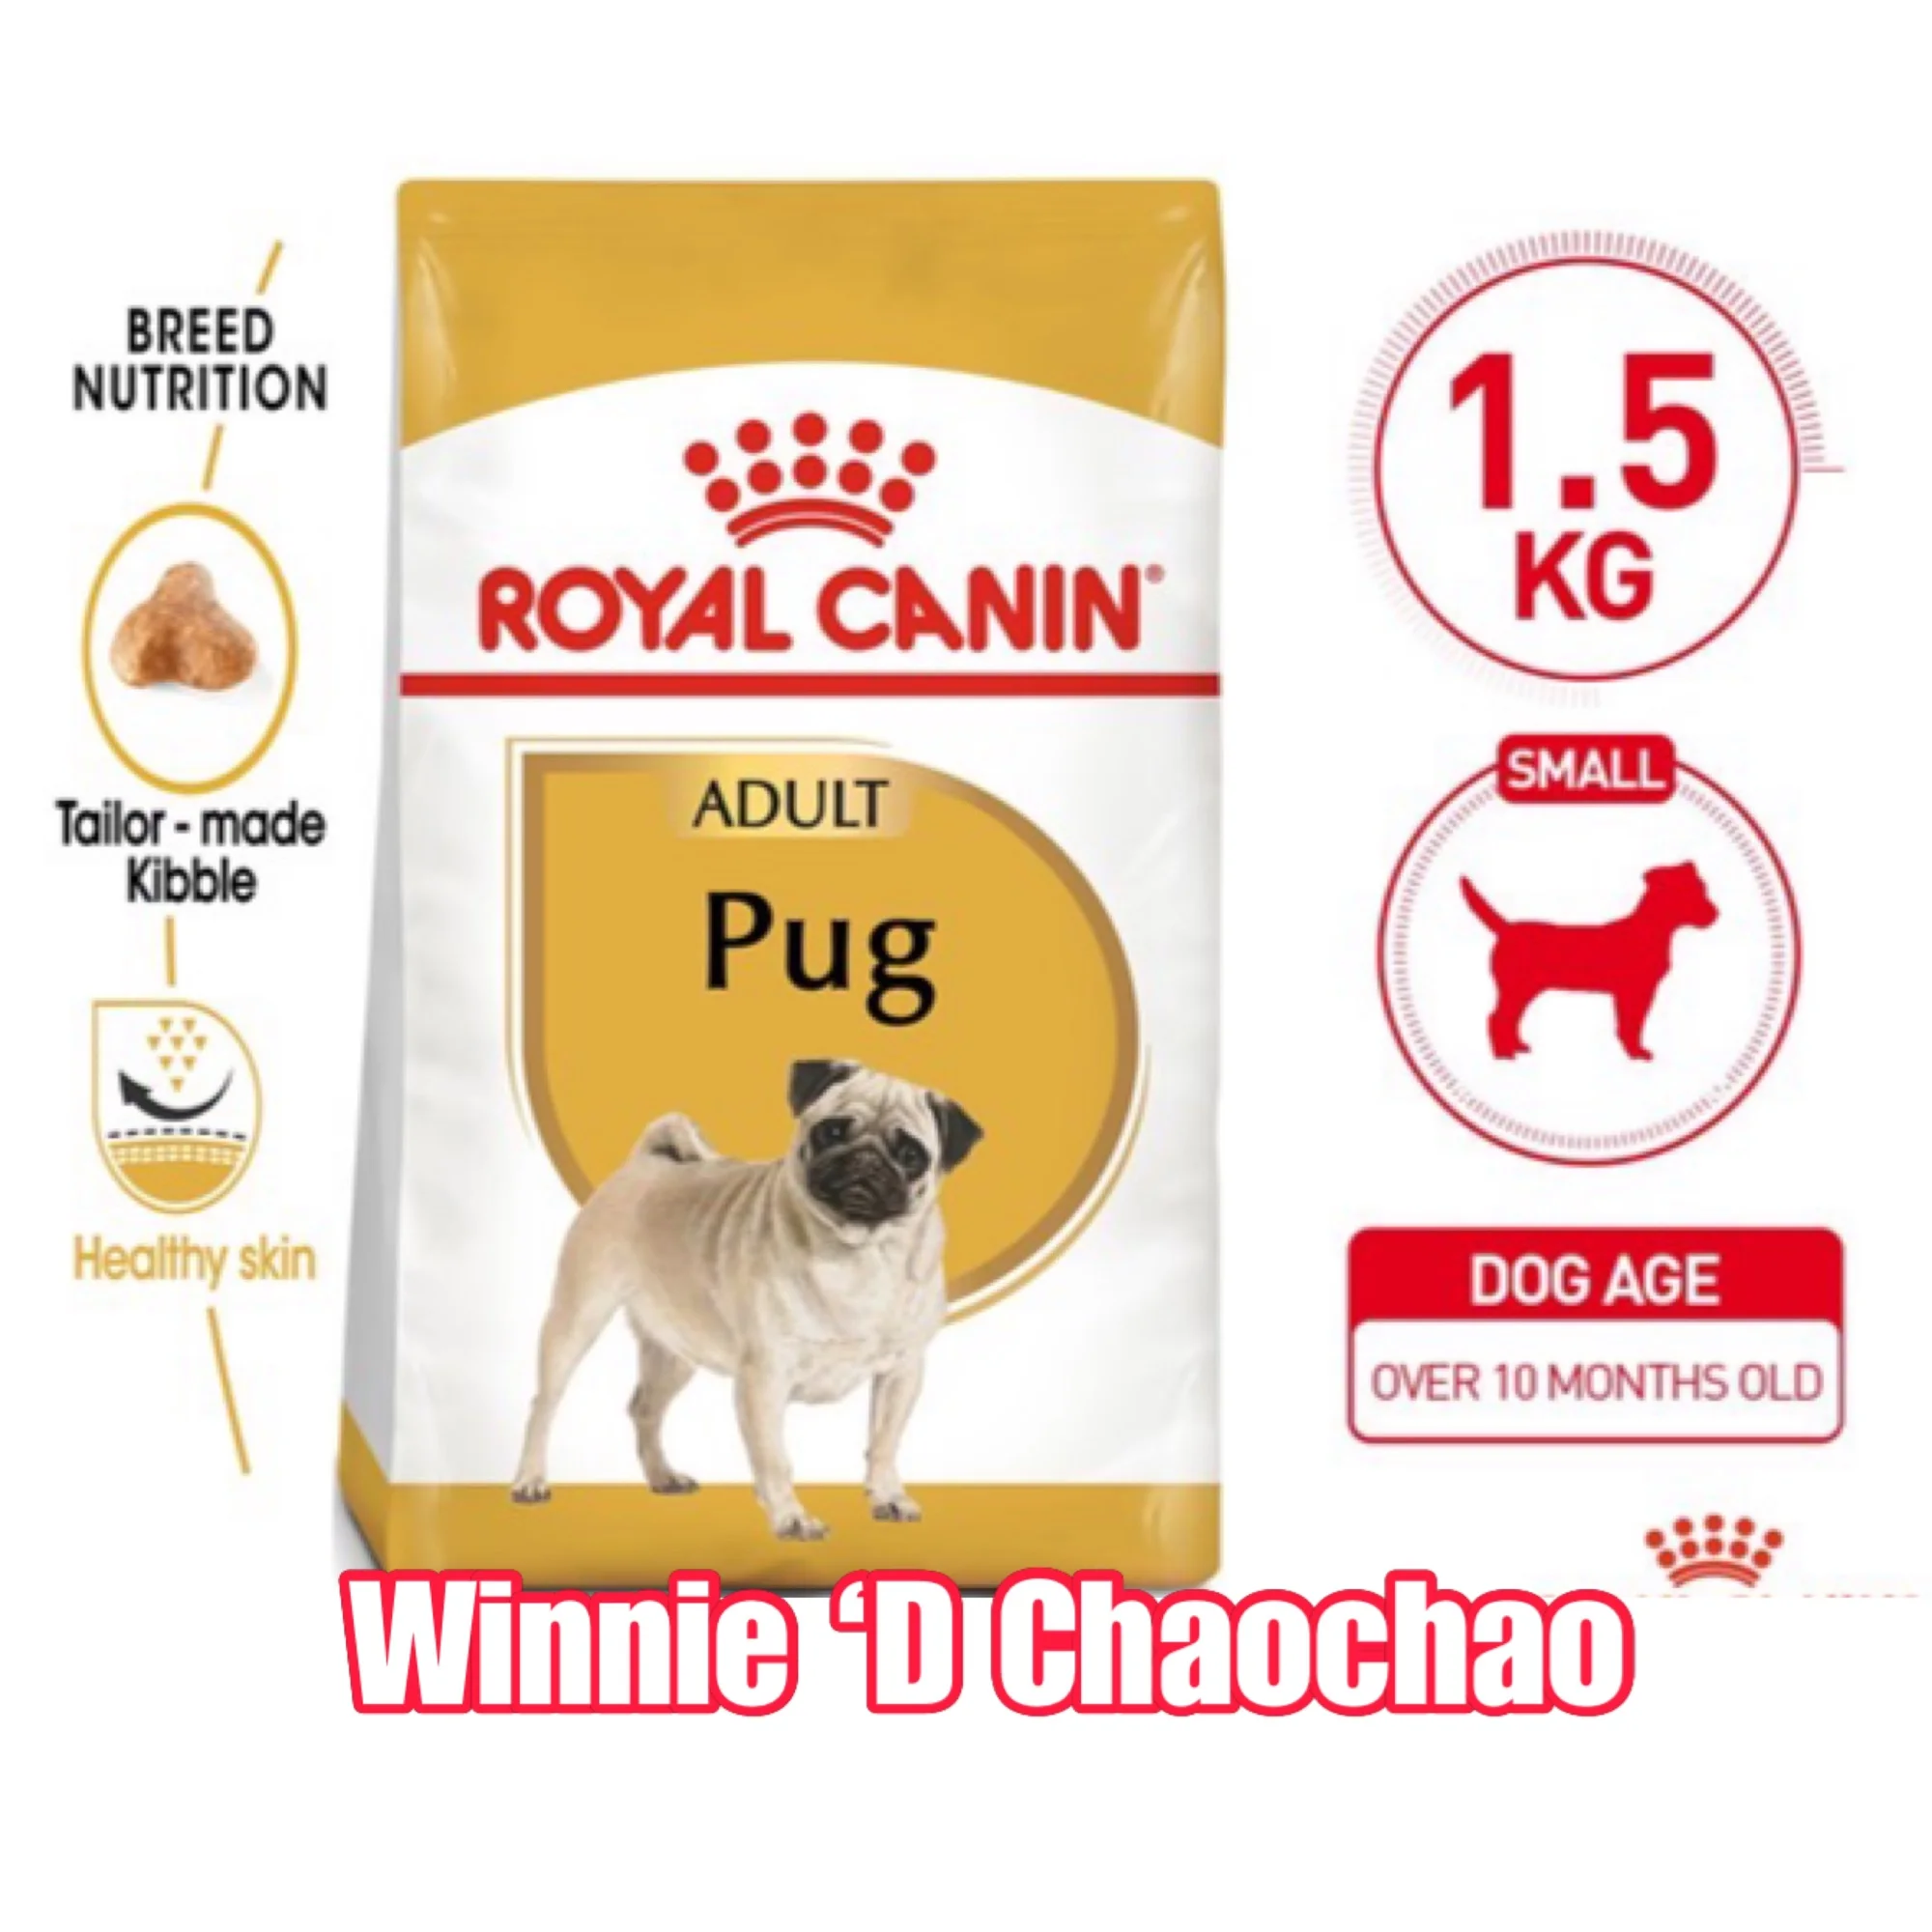 Royal Canin Pug Adult 1.5kg Dry Dog Food